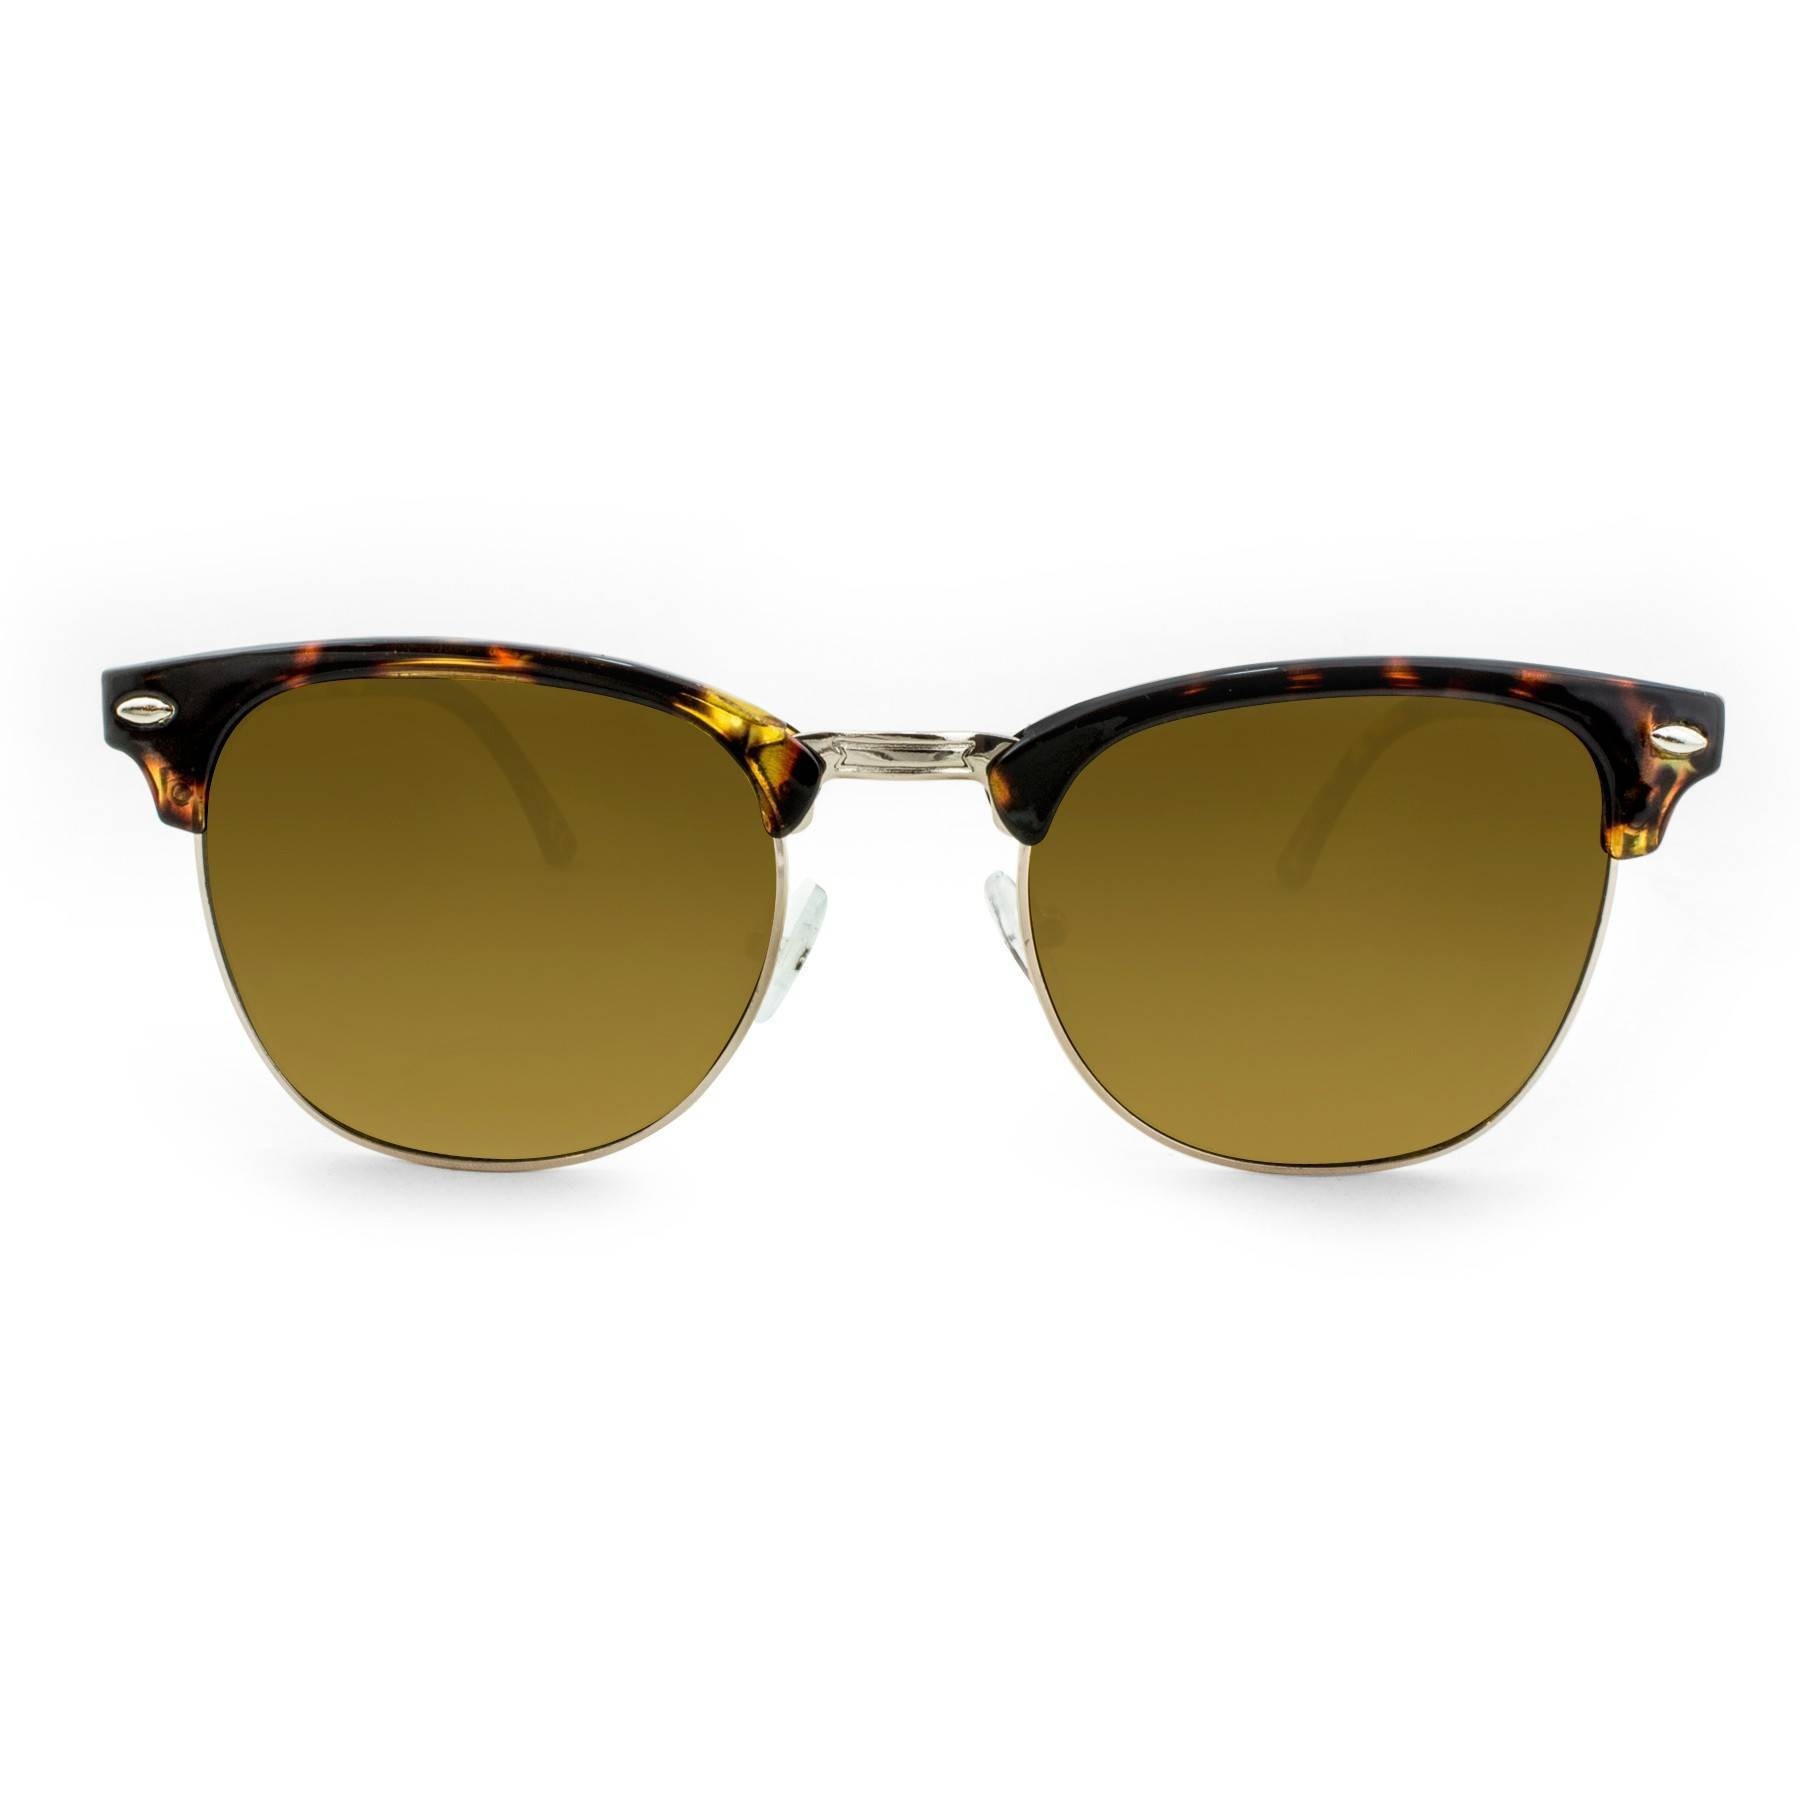 slide 1 of 3, Women's Retro Browline Sunglasses - A New Day Brown, 1 ct